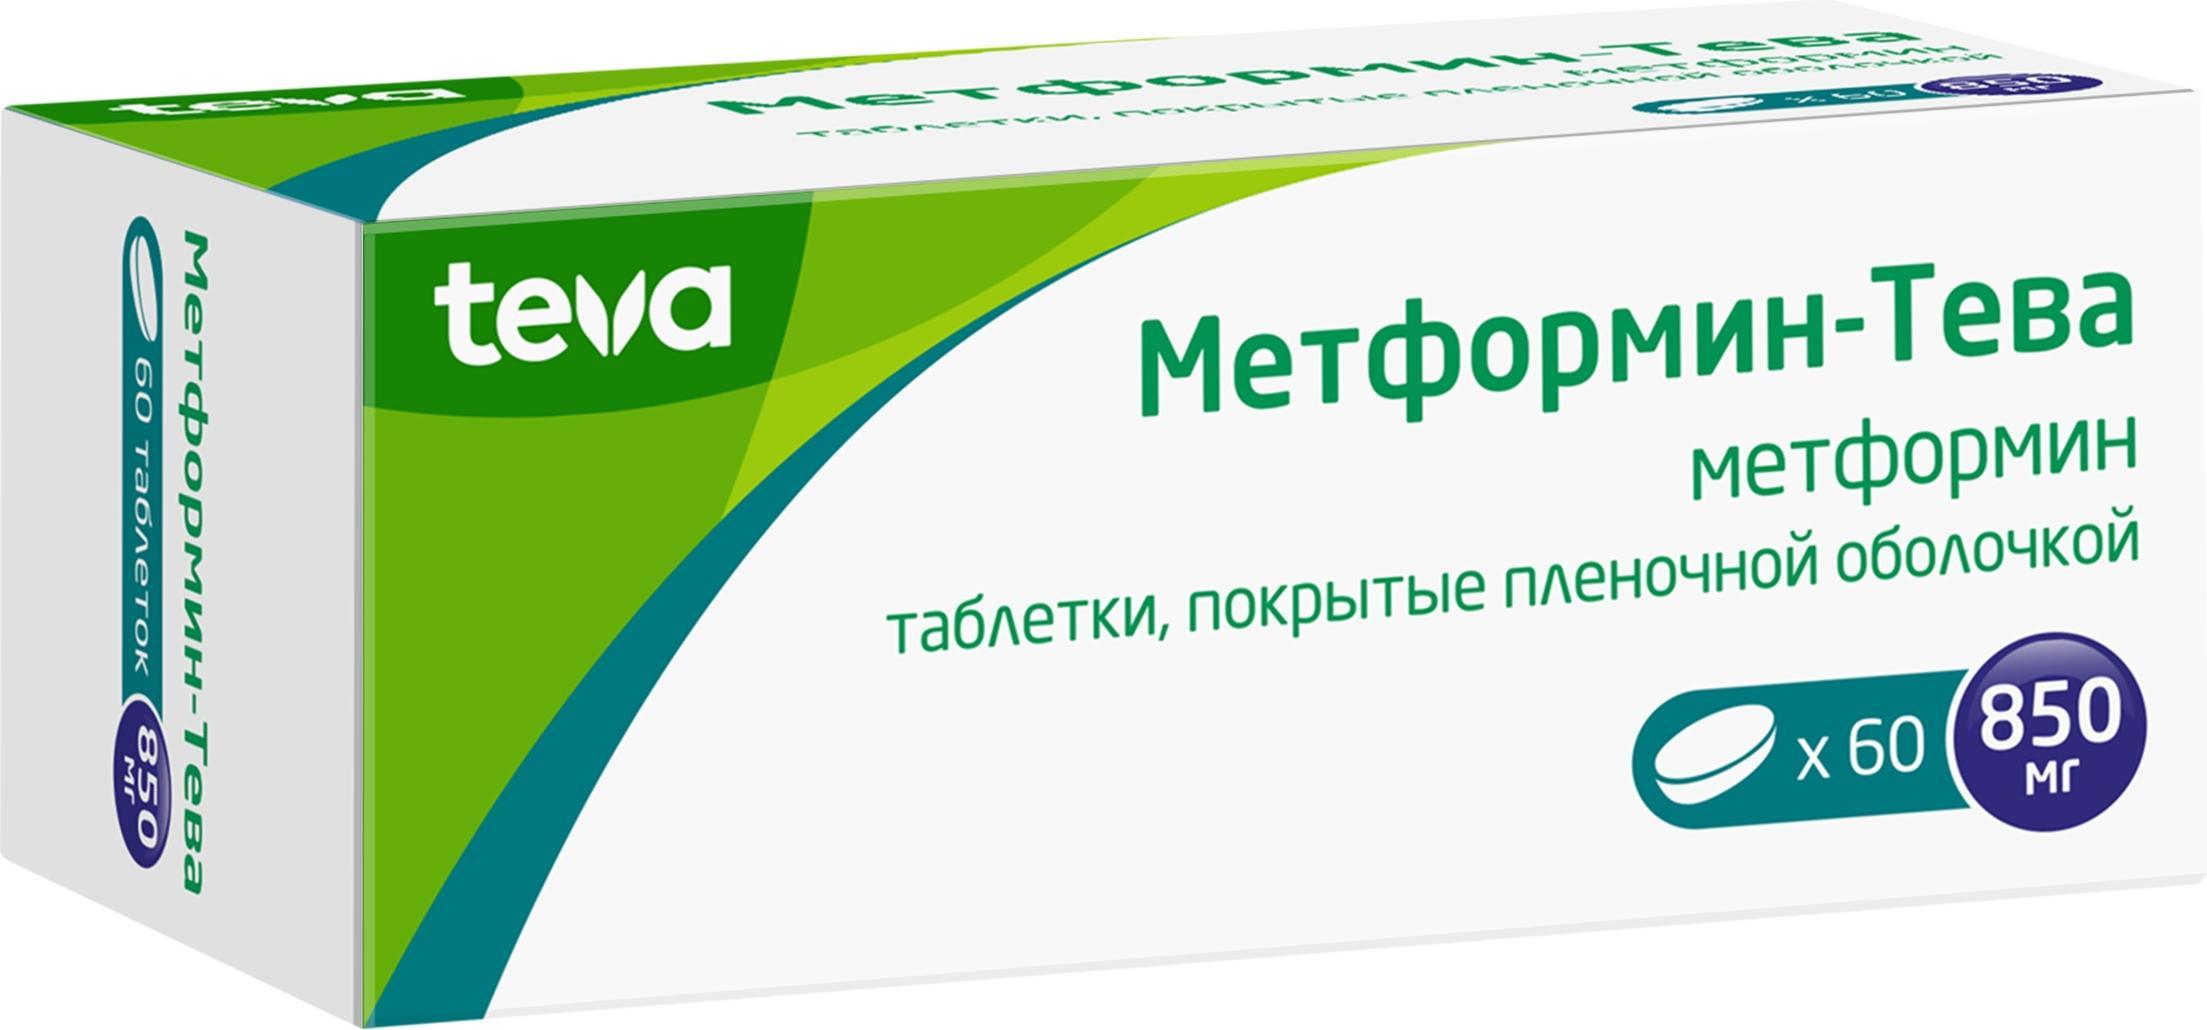 Метформин-Тева, таблетки  850 мг, 60 шт.